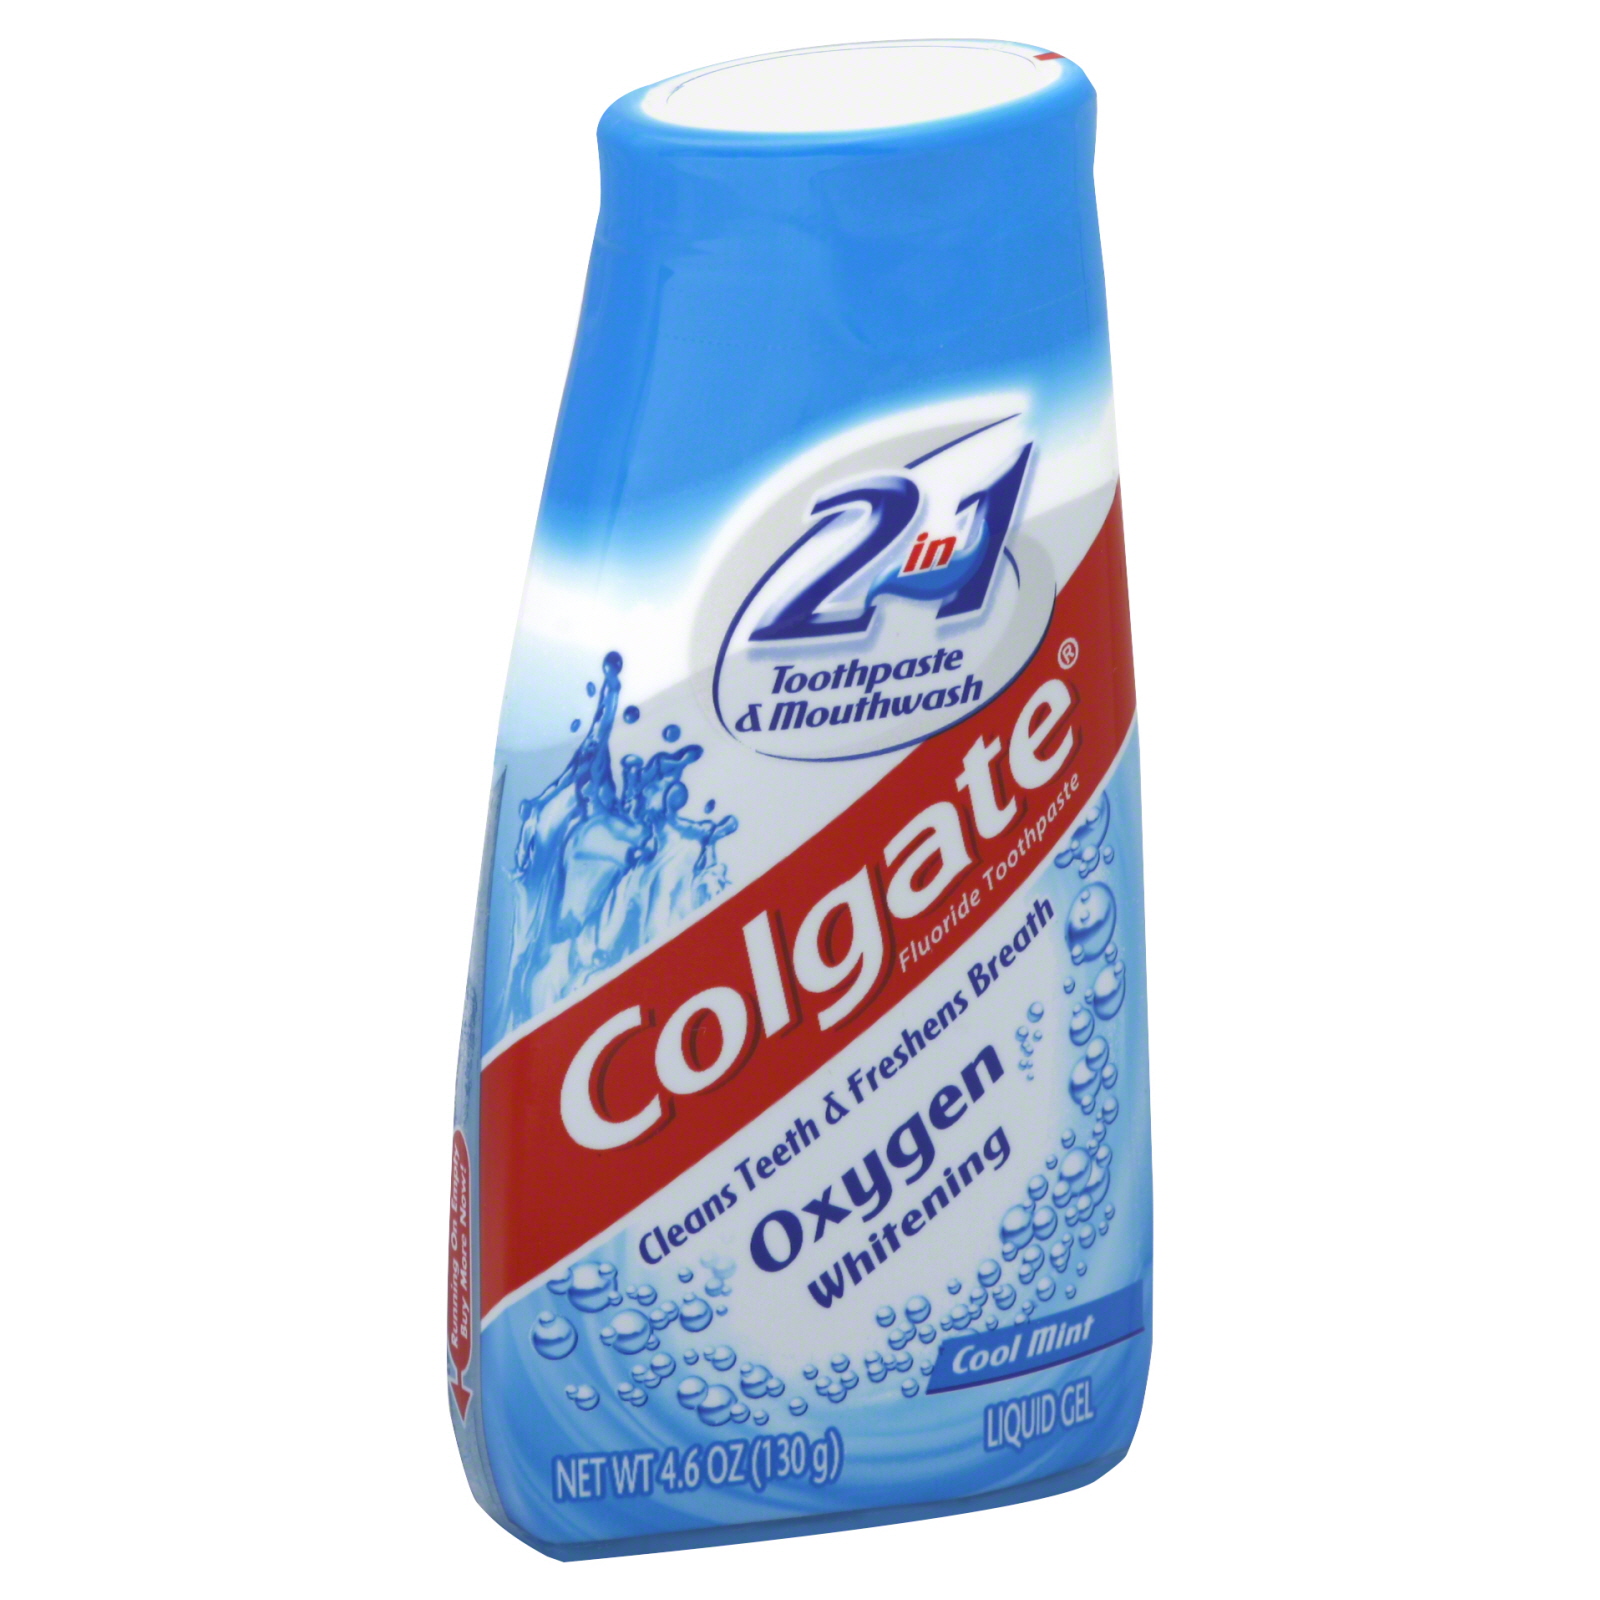 Colgate-Palmolive Oxygen Whitening 2 in 1 Toothpaste & Mouthwash, Cool Mint, Liquid Gel, 4.6 oz (130 g)